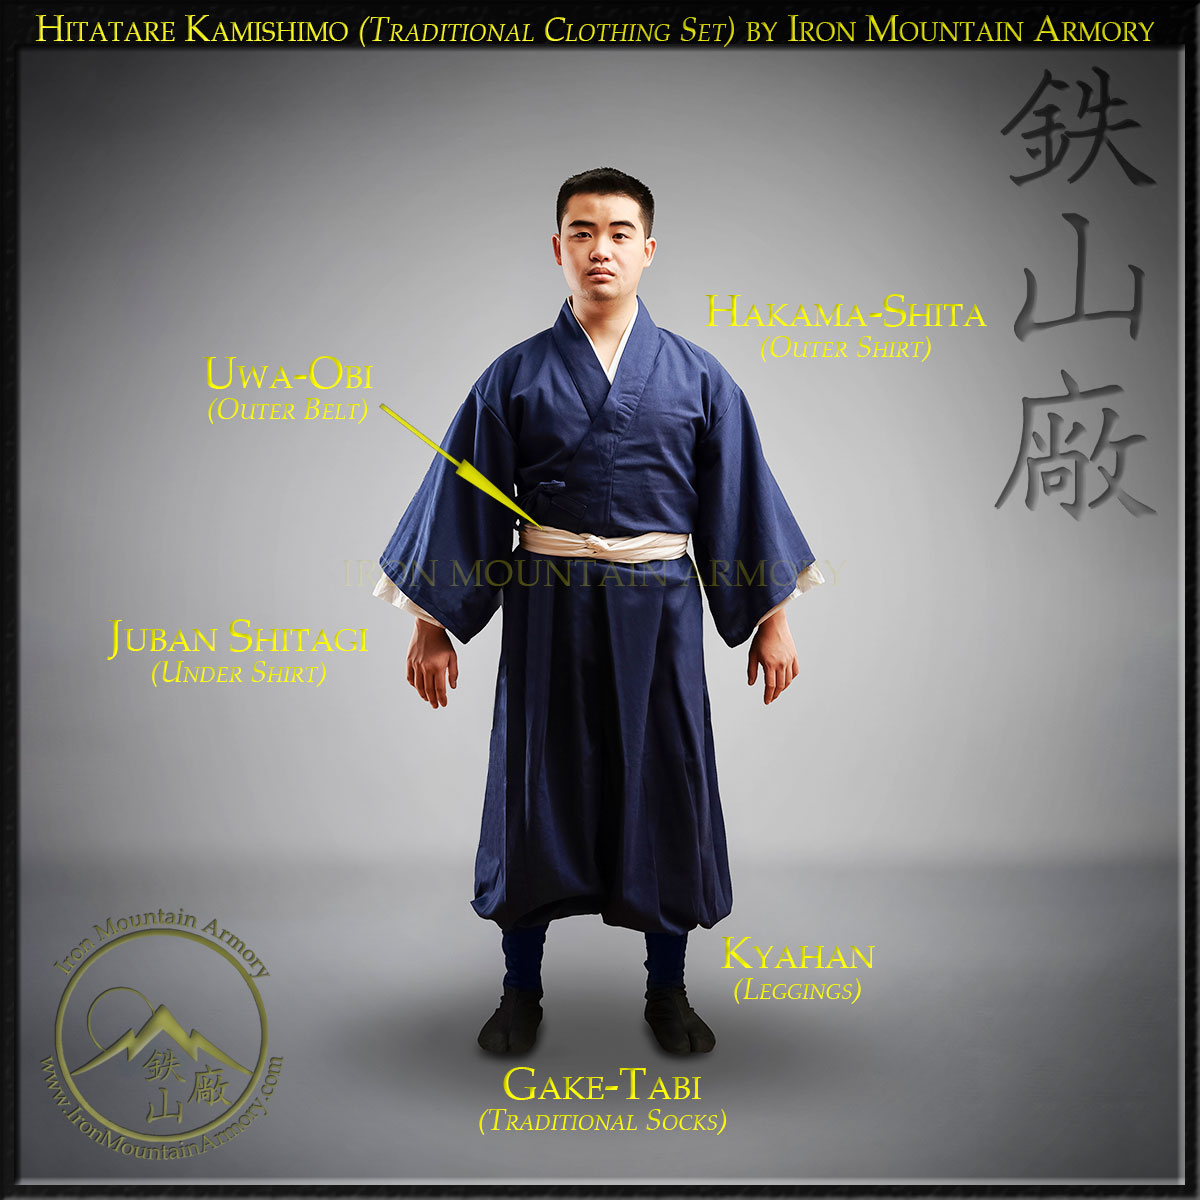 hitatare-kamishimo-traditional-japanese-samurai-clothing-set-01b-by-iron-mountain-armory.jpg